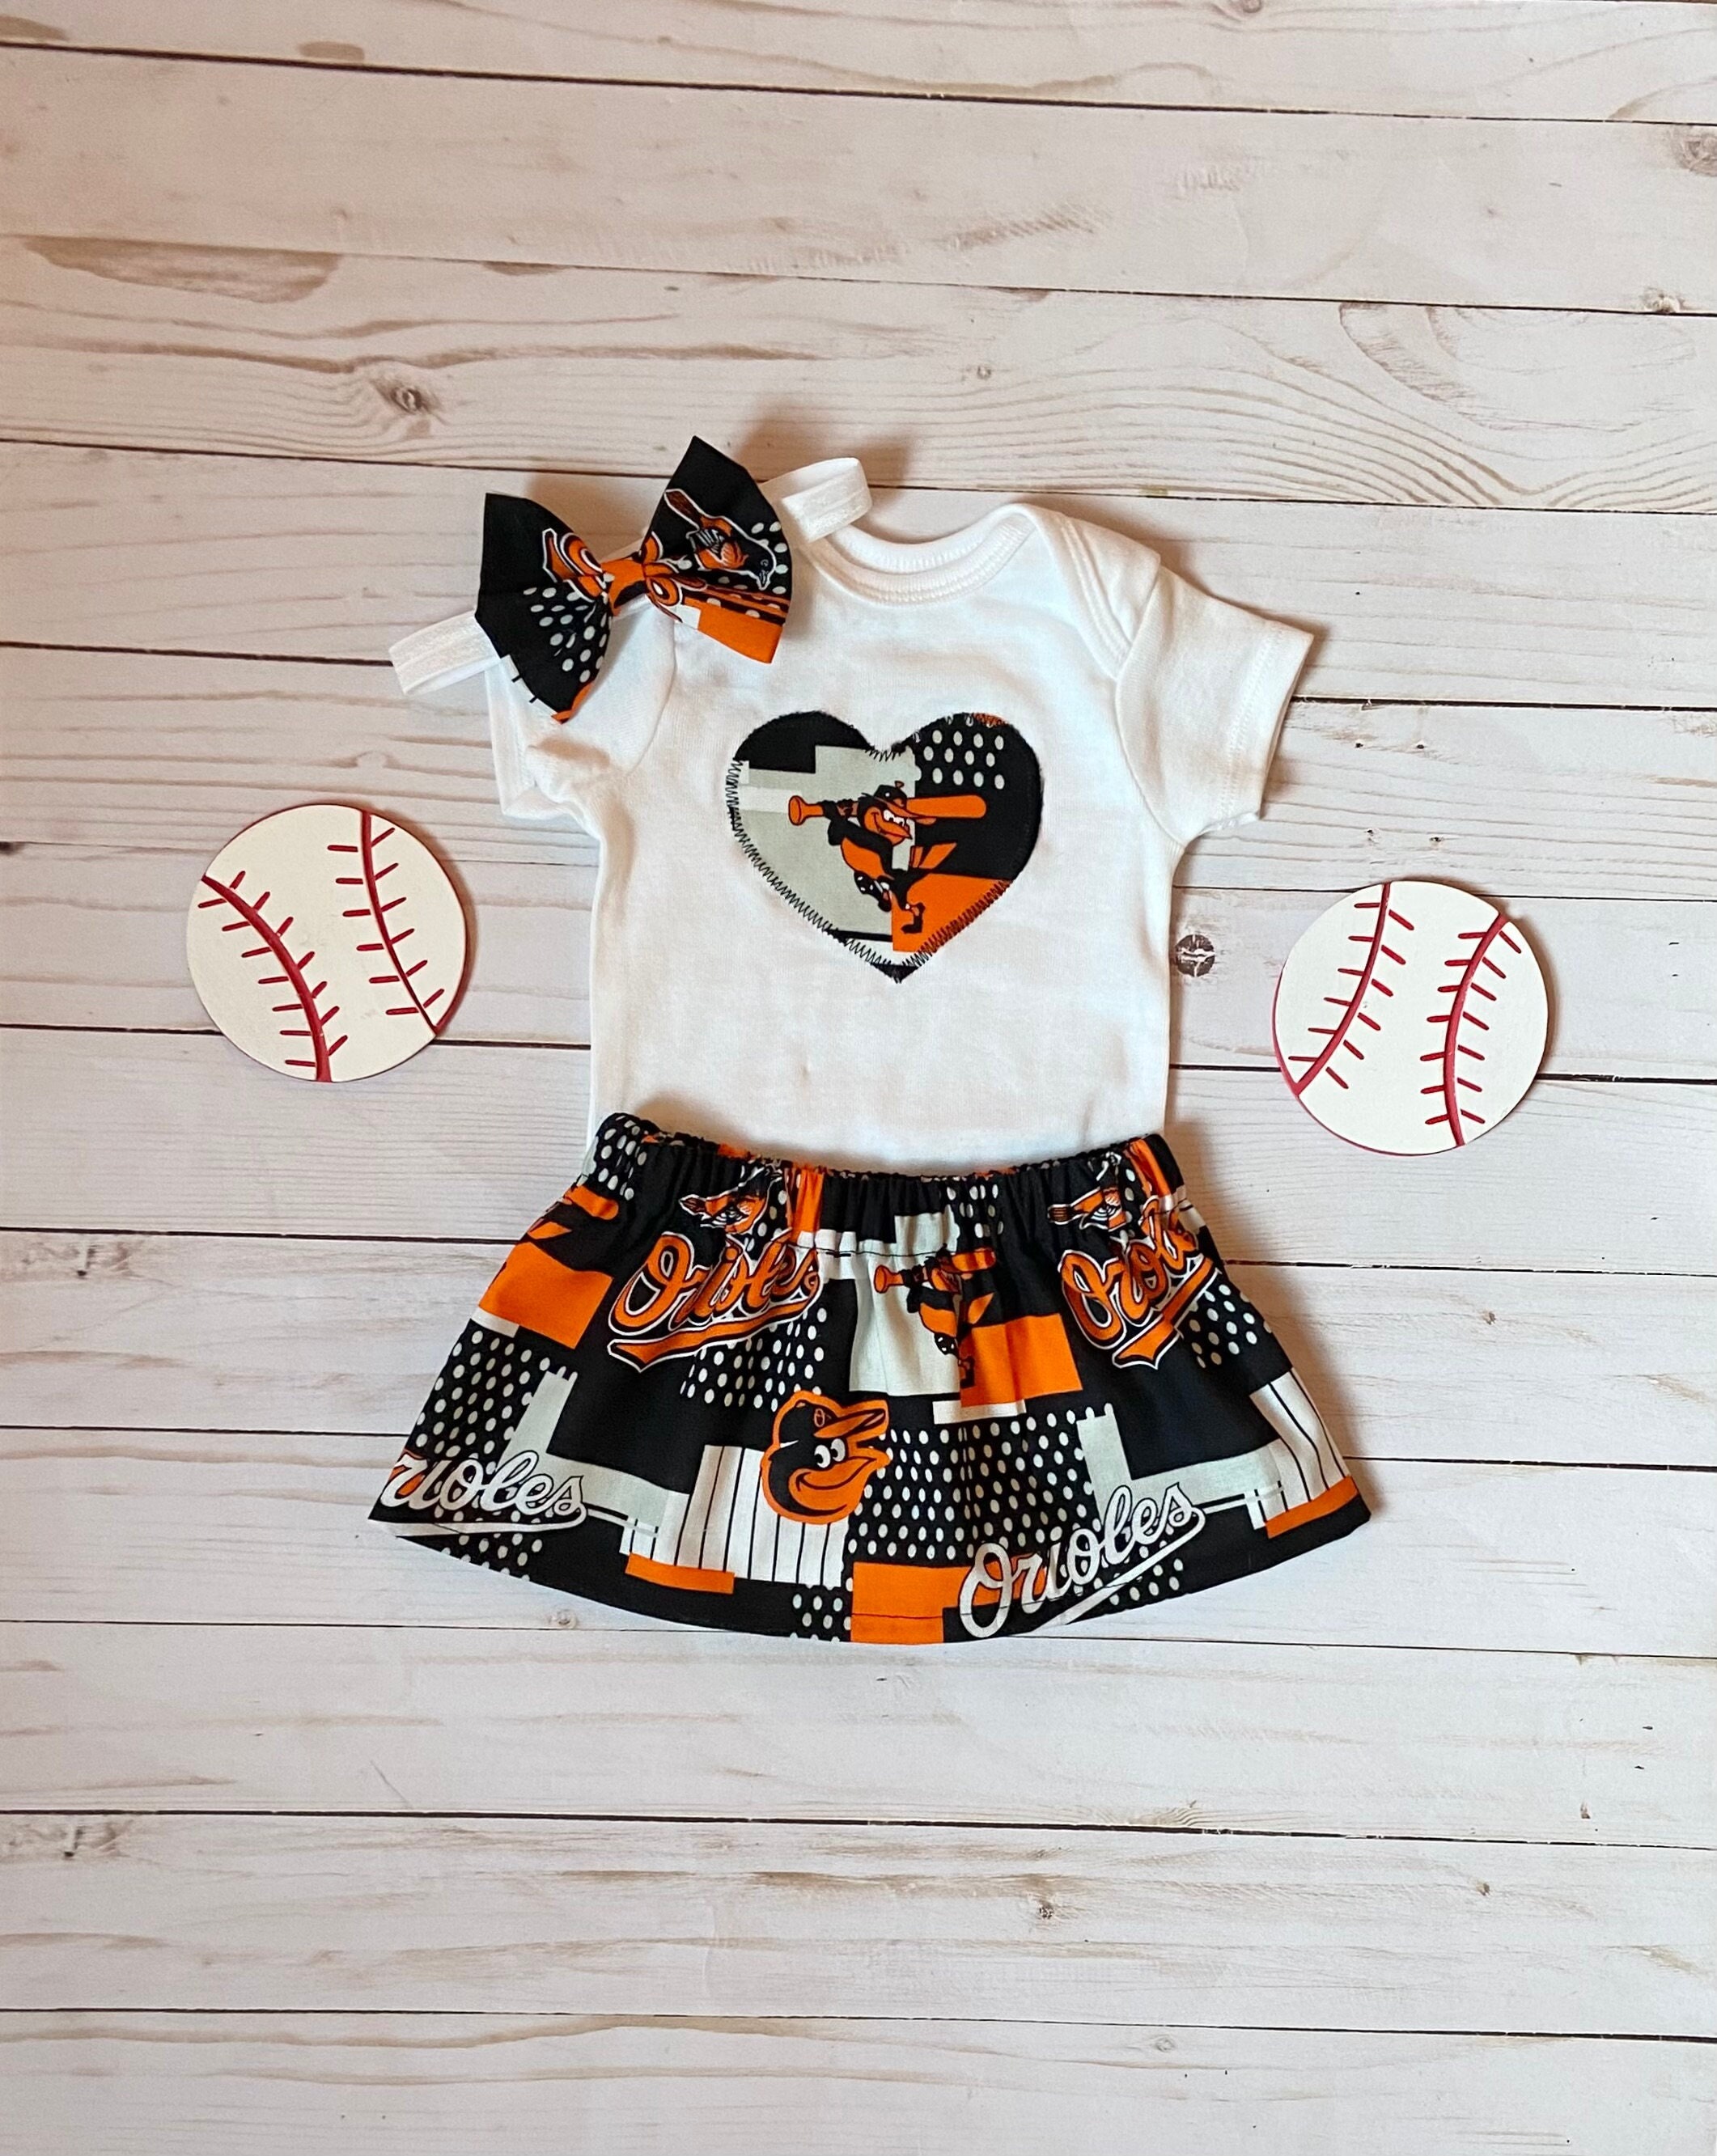 Orioles Baby Orioles Baby Outfit Orioles Baby Skirt Orioles 